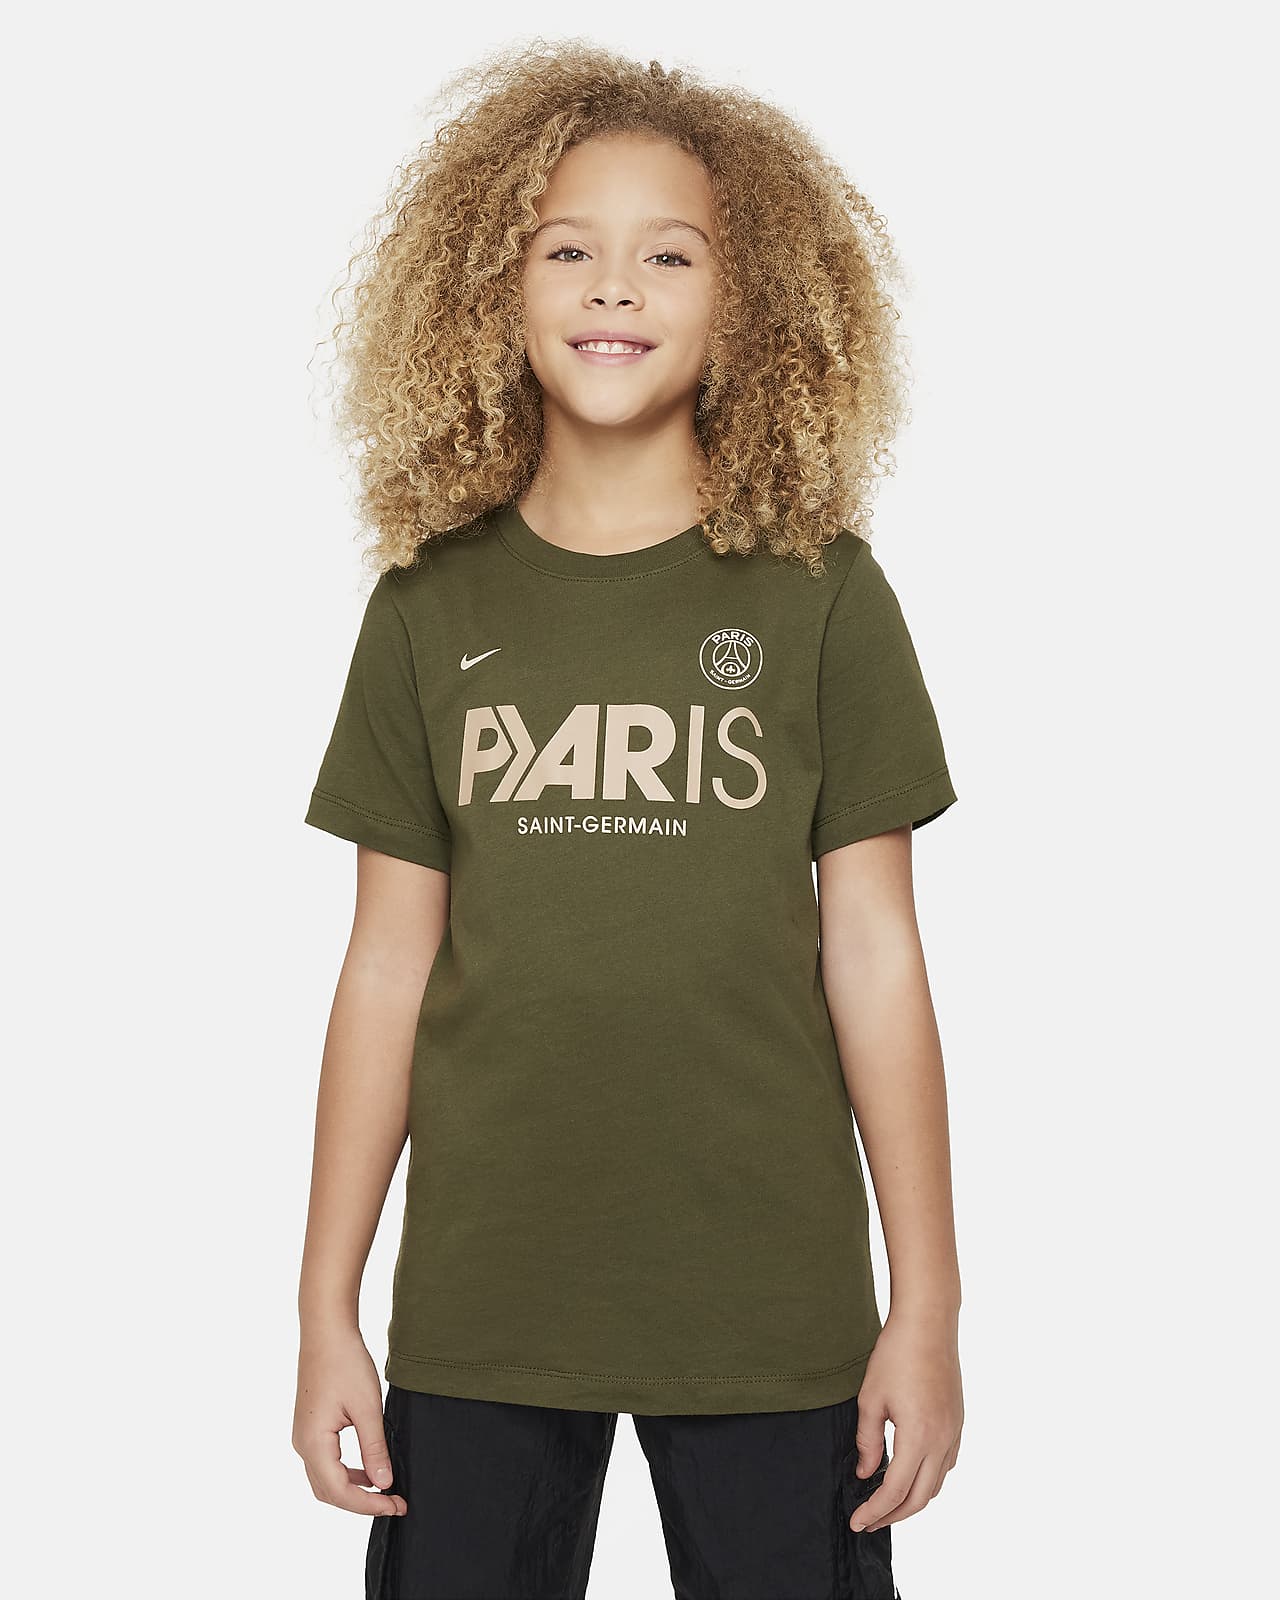 Playera de fútbol Nike para niños talla grande Paris Saint-Germain Mercurial